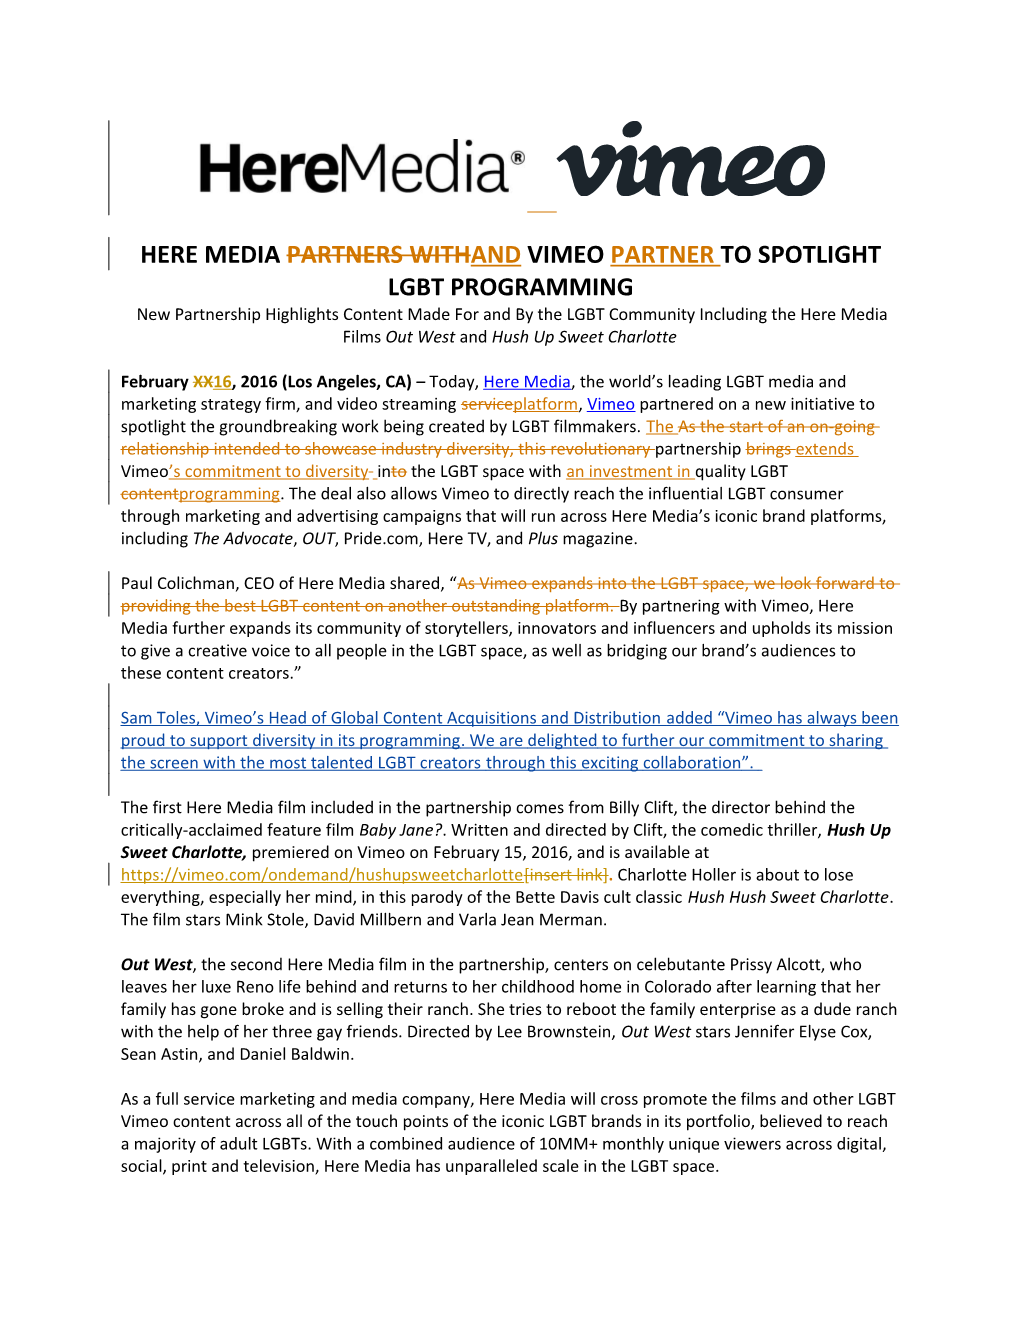 Here Media Partners Withand Vimeo Partner to Spotlight Lgbt Programming